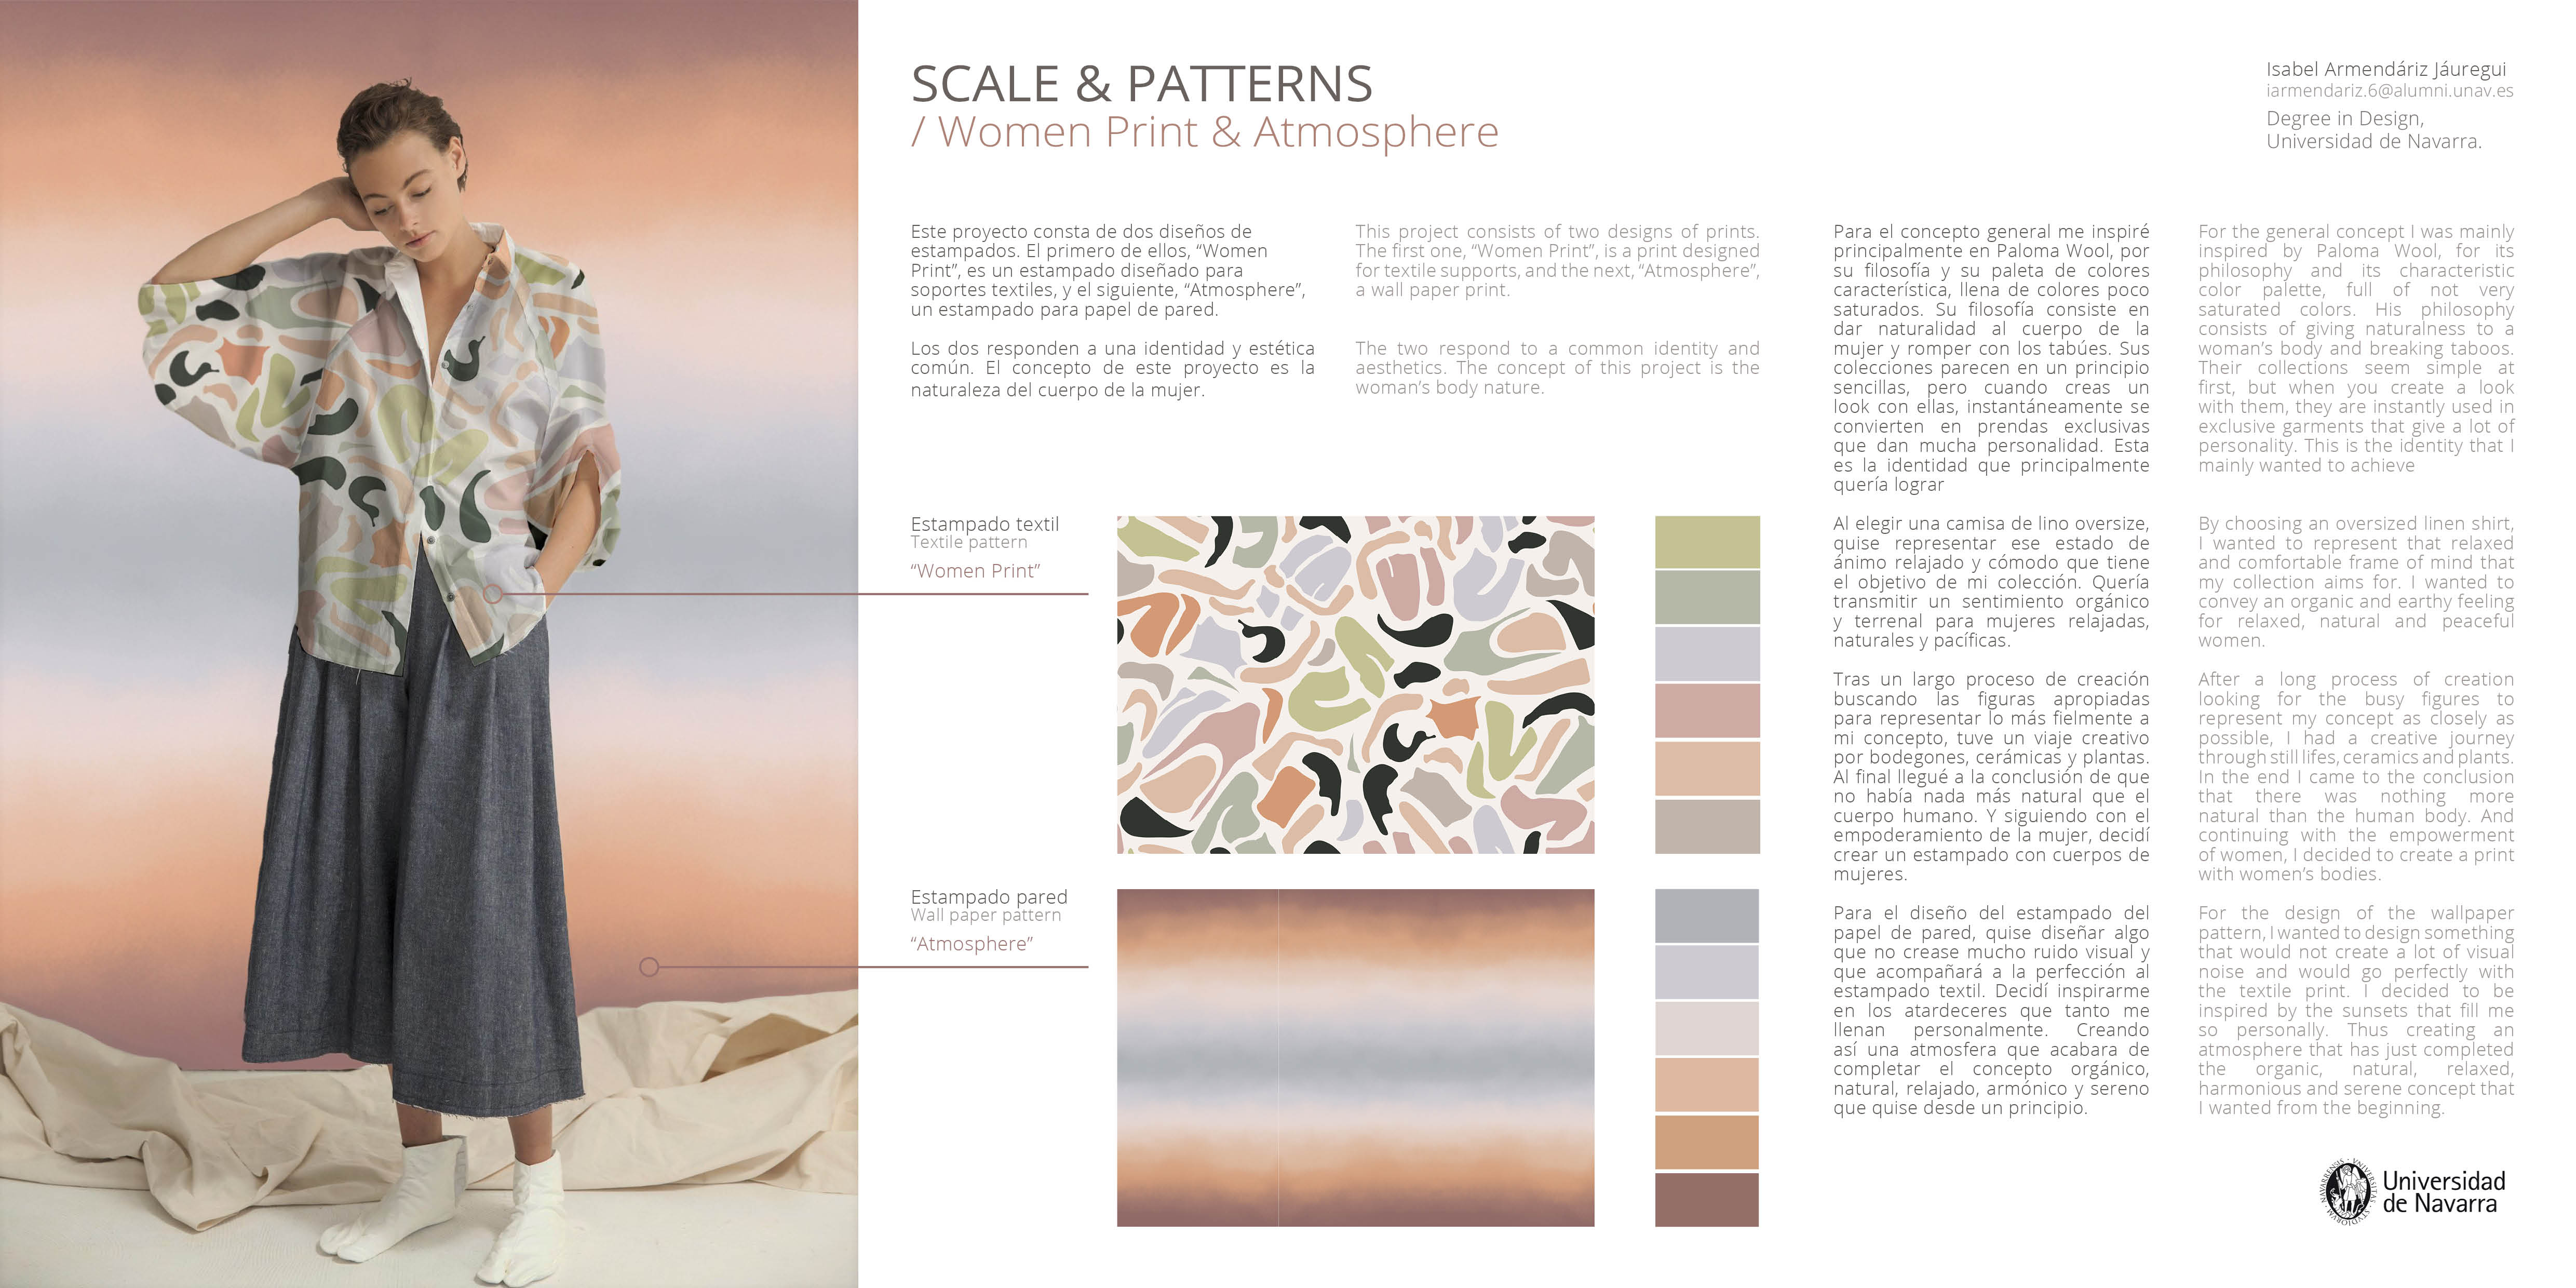 Scale & Patterns / Women Print & Atmosphere by Isabel Armendariz Jauregui - Creative Work - $i